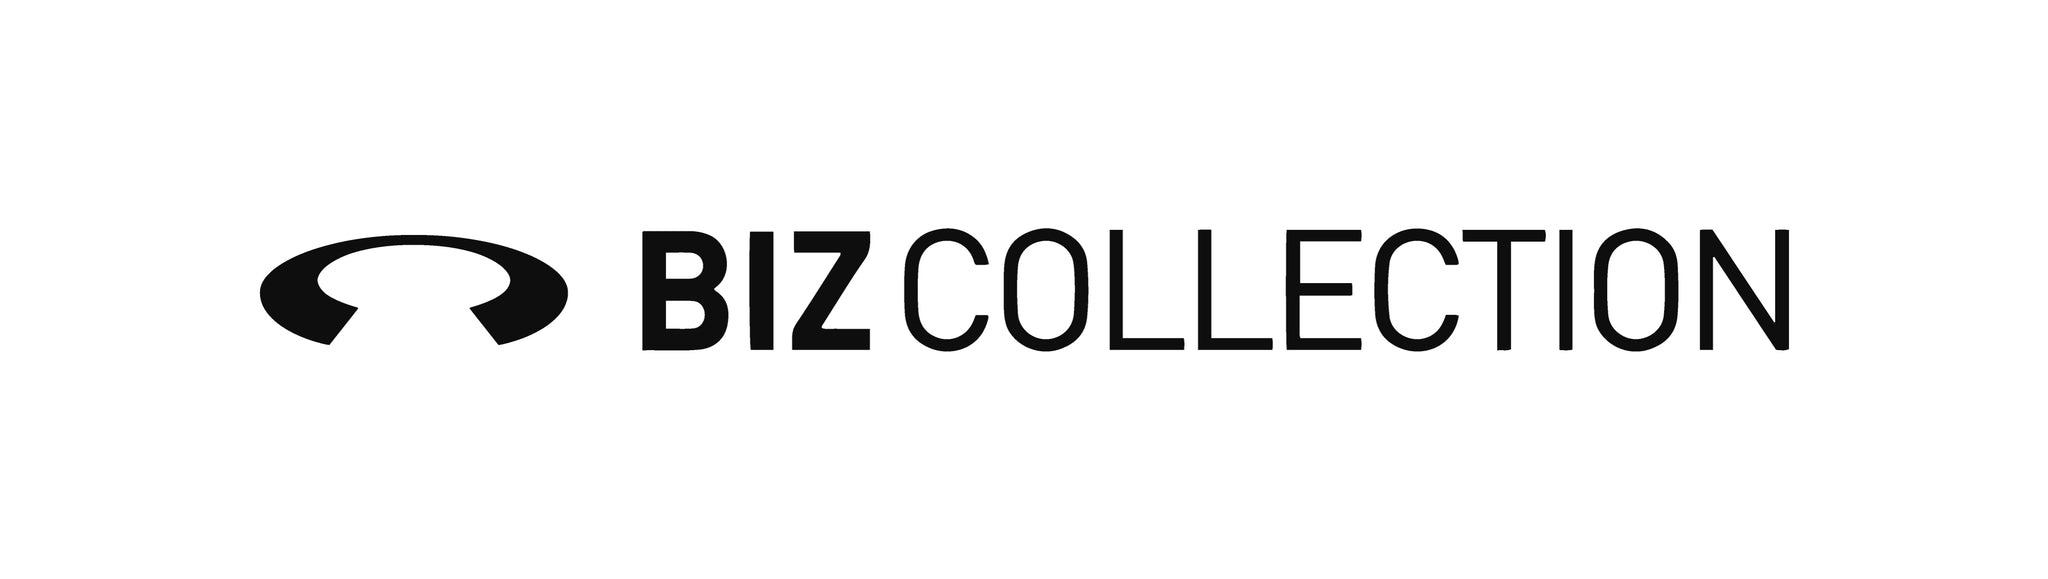 Biz Collection Logo Clothing screen print embroidery supacolour